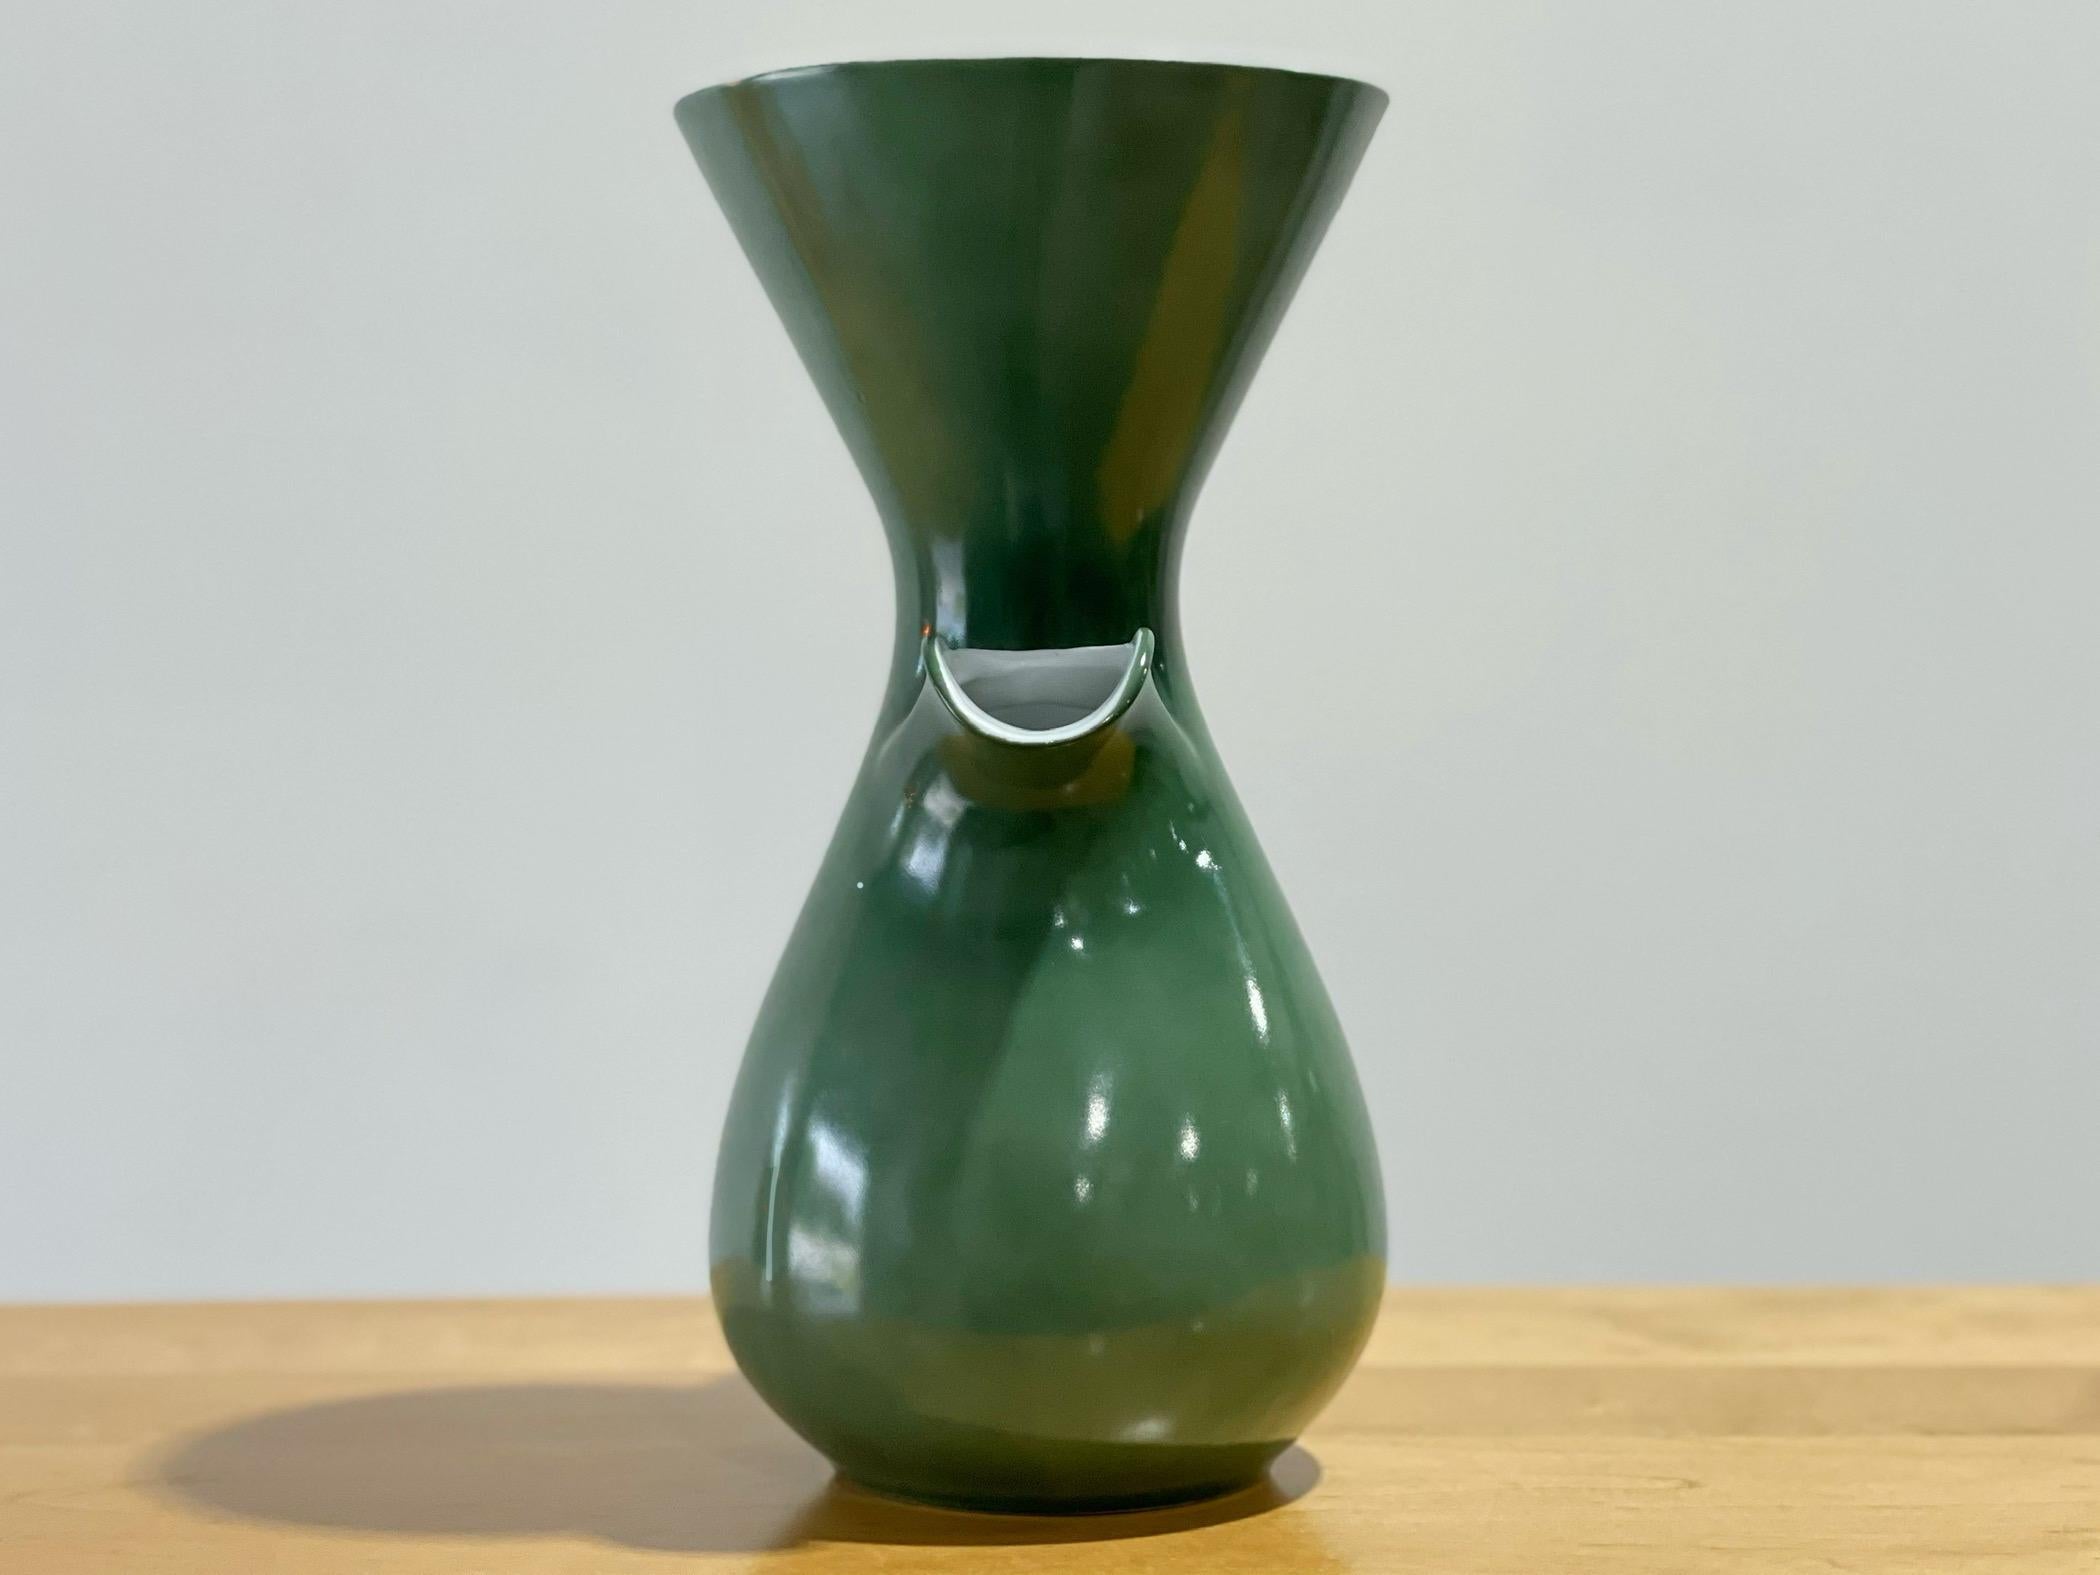 Kenji Fujita for Freeman Lederman, Modernist Coffee Carafe Pitcher - Green In Good Condition For Sale In Decatur, GA